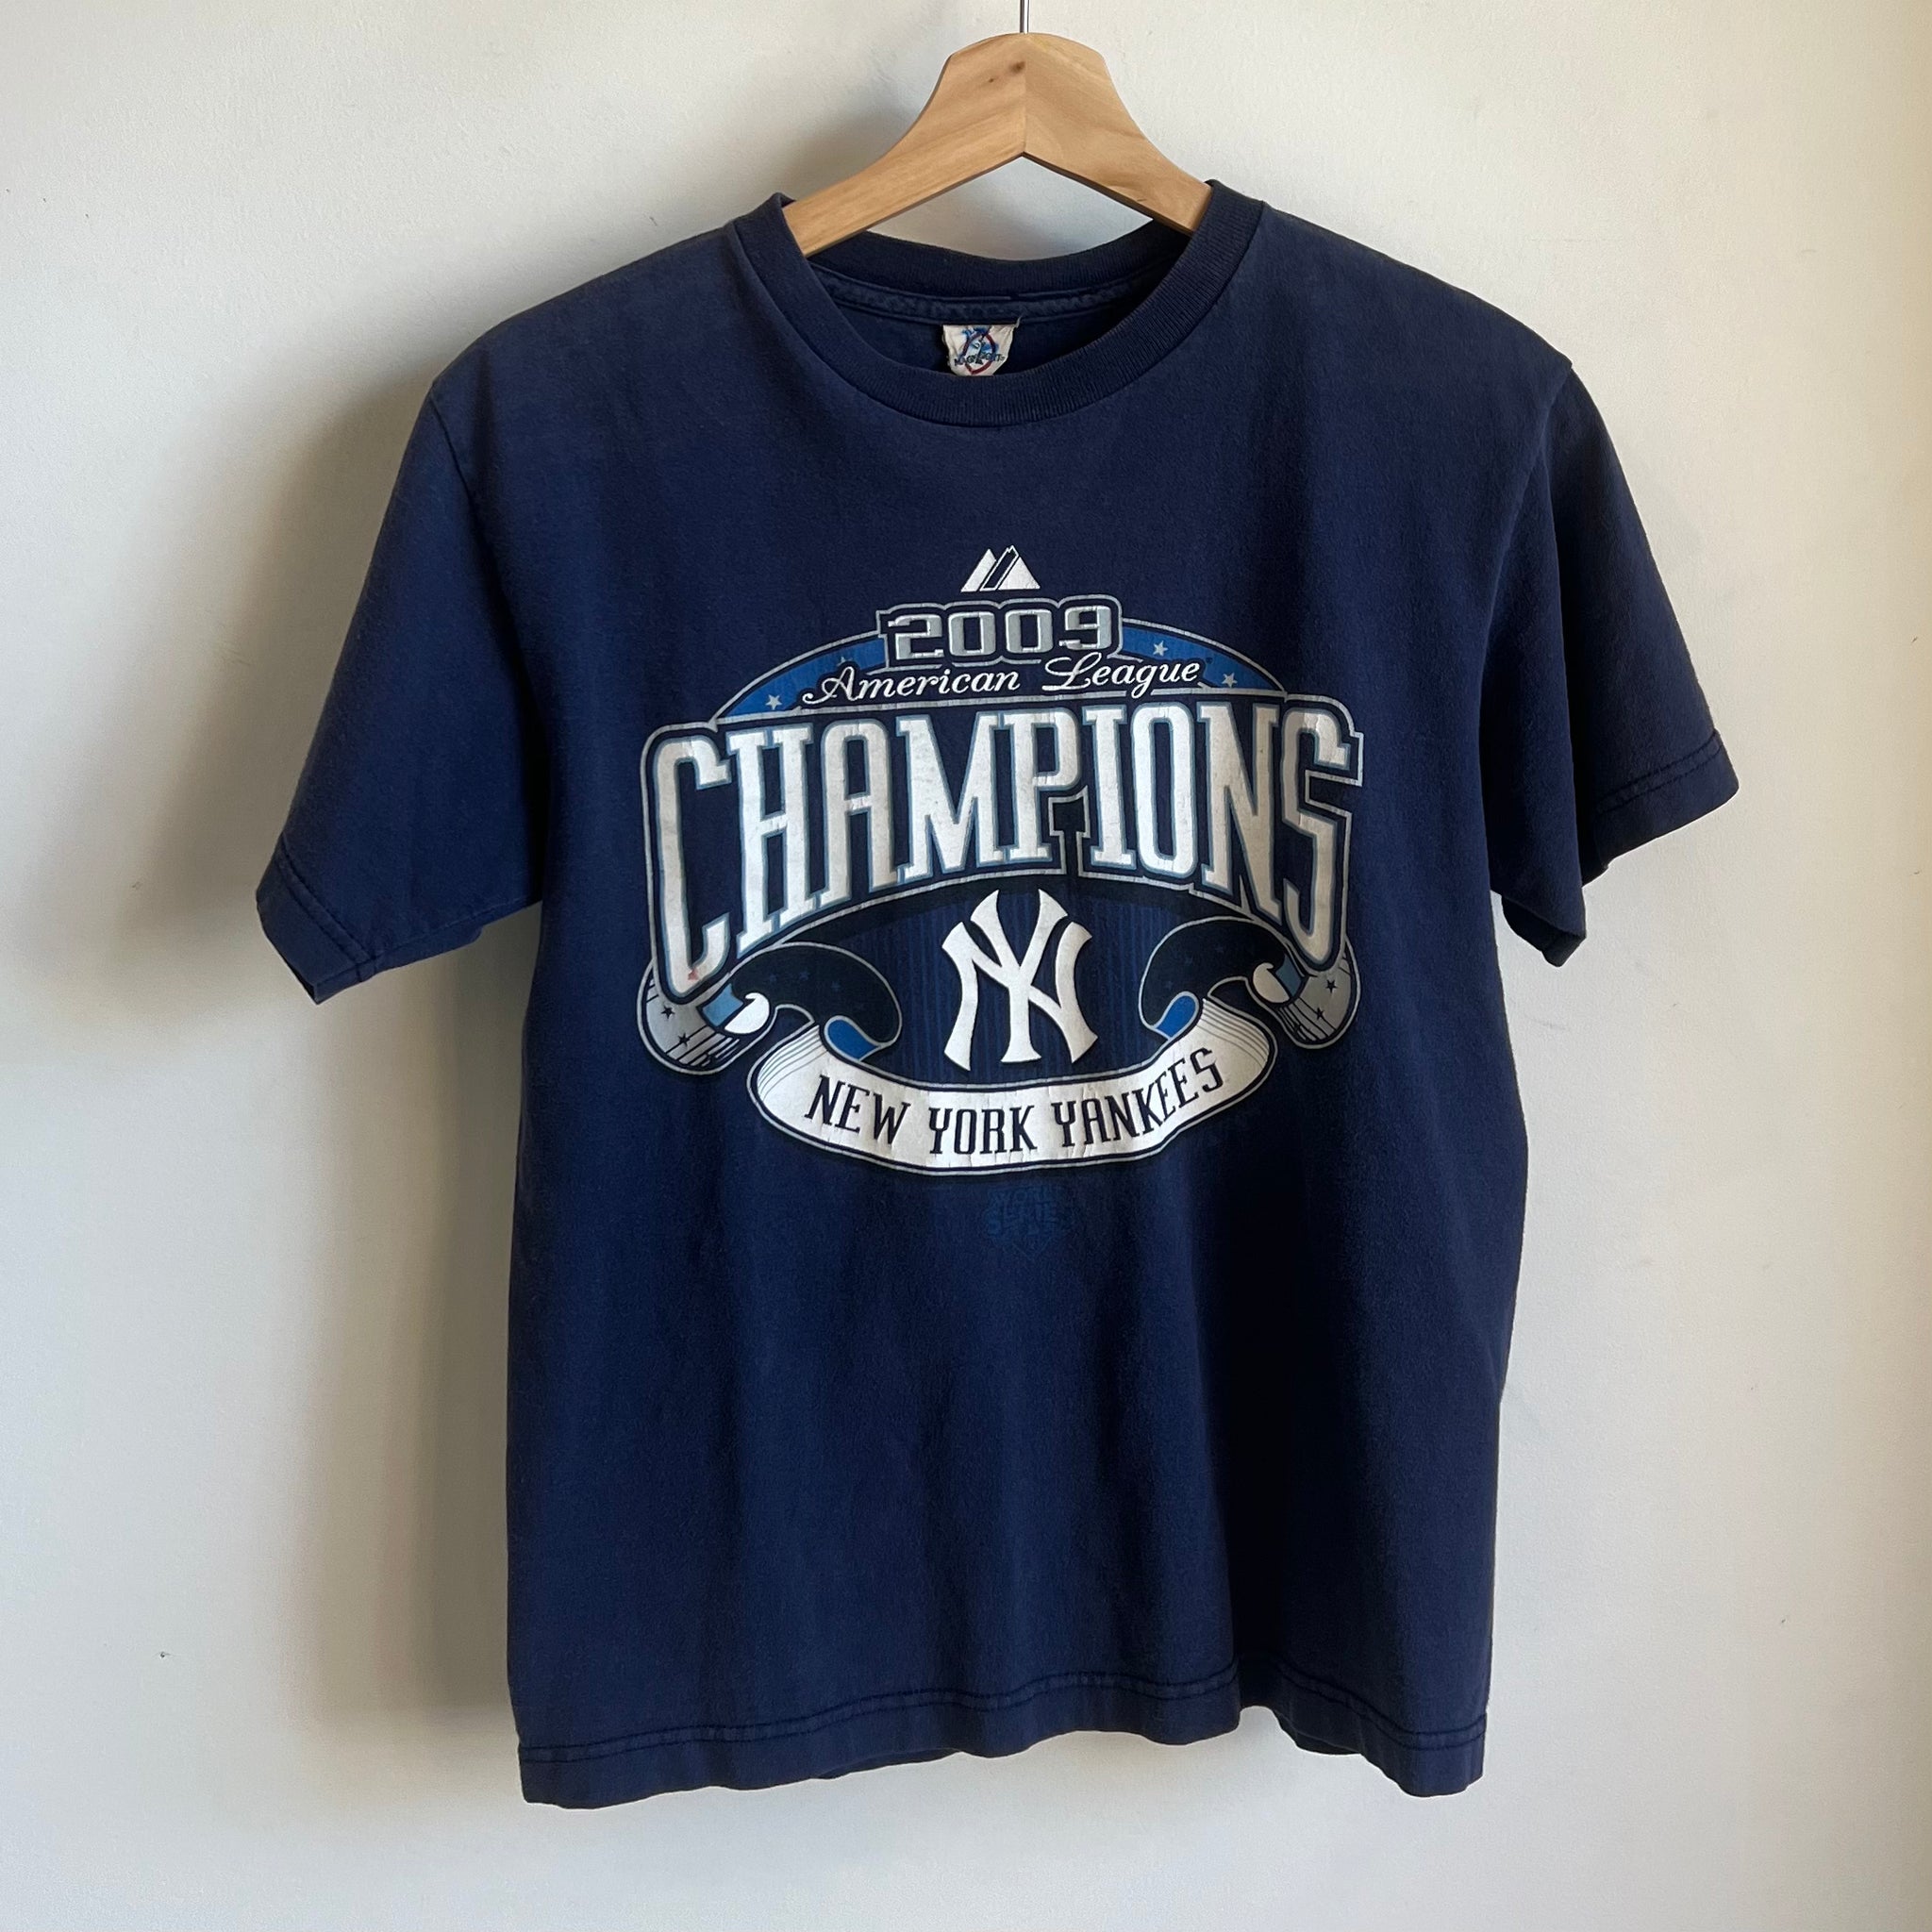 New York Yankees 2009 American League Champions Navy Tee shirt